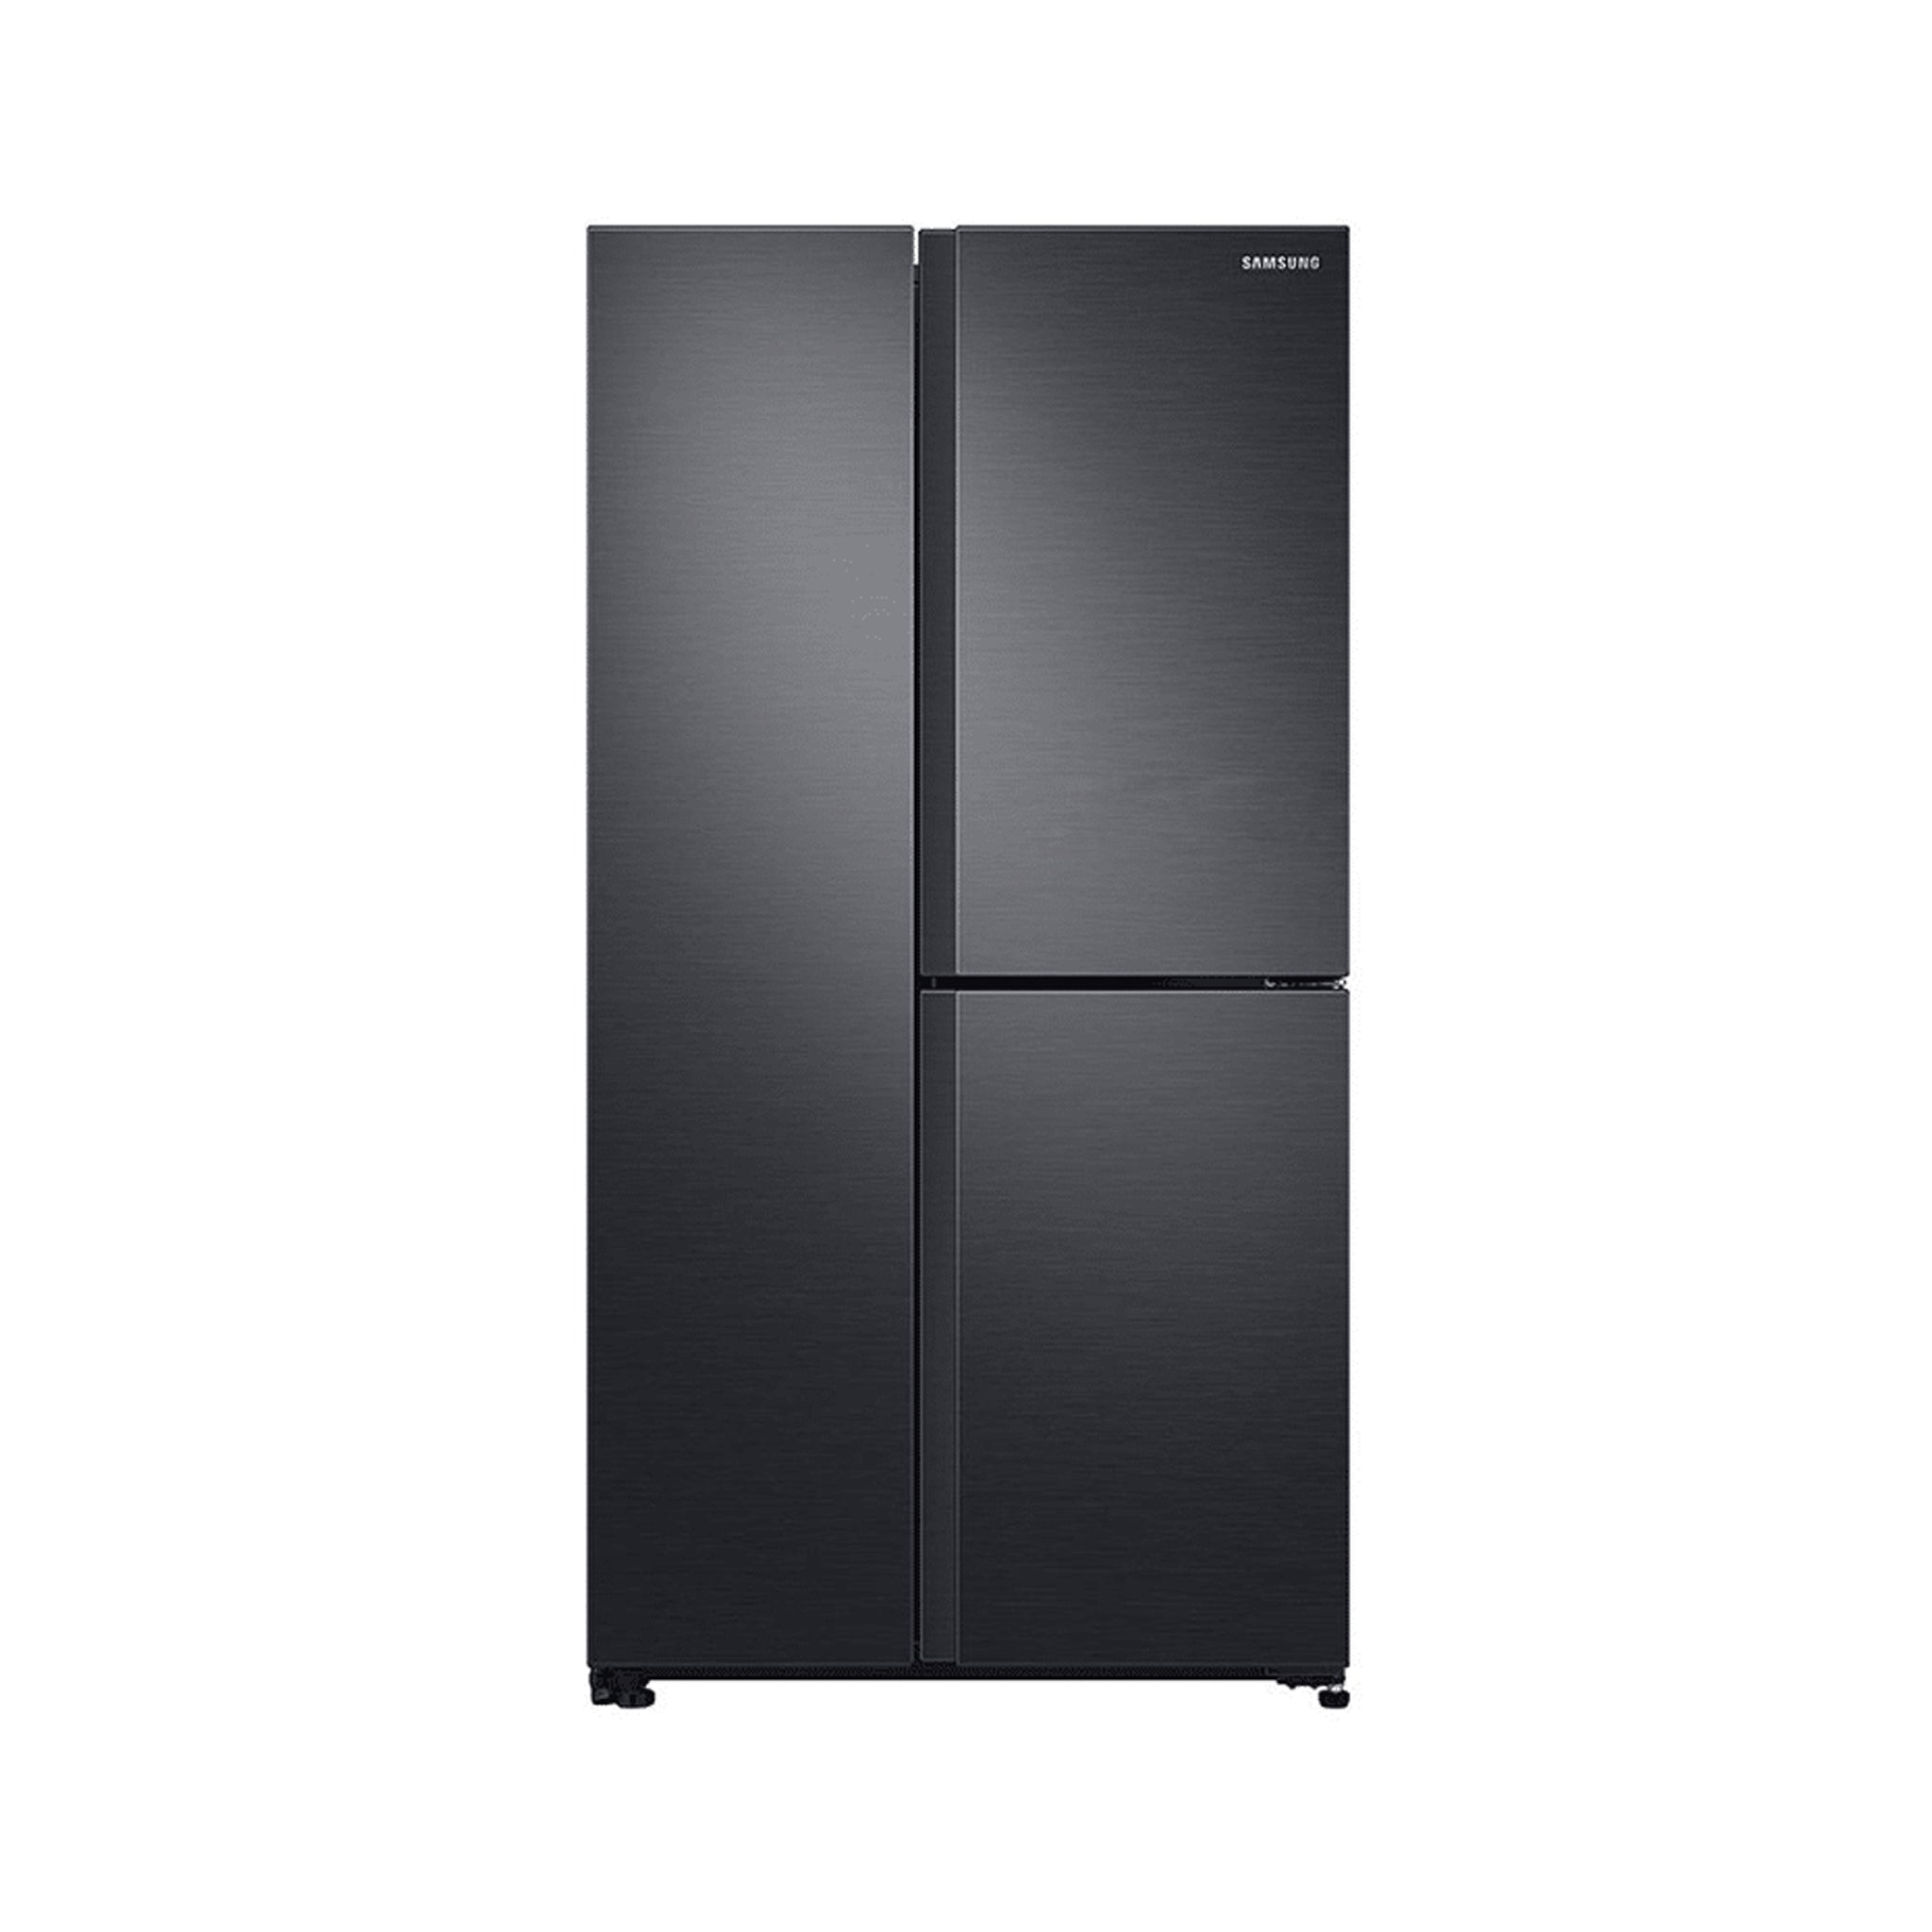 SAMSUNG RS63R5591B4 24.3 cu.ft Side by Side Refrigerator Samsung